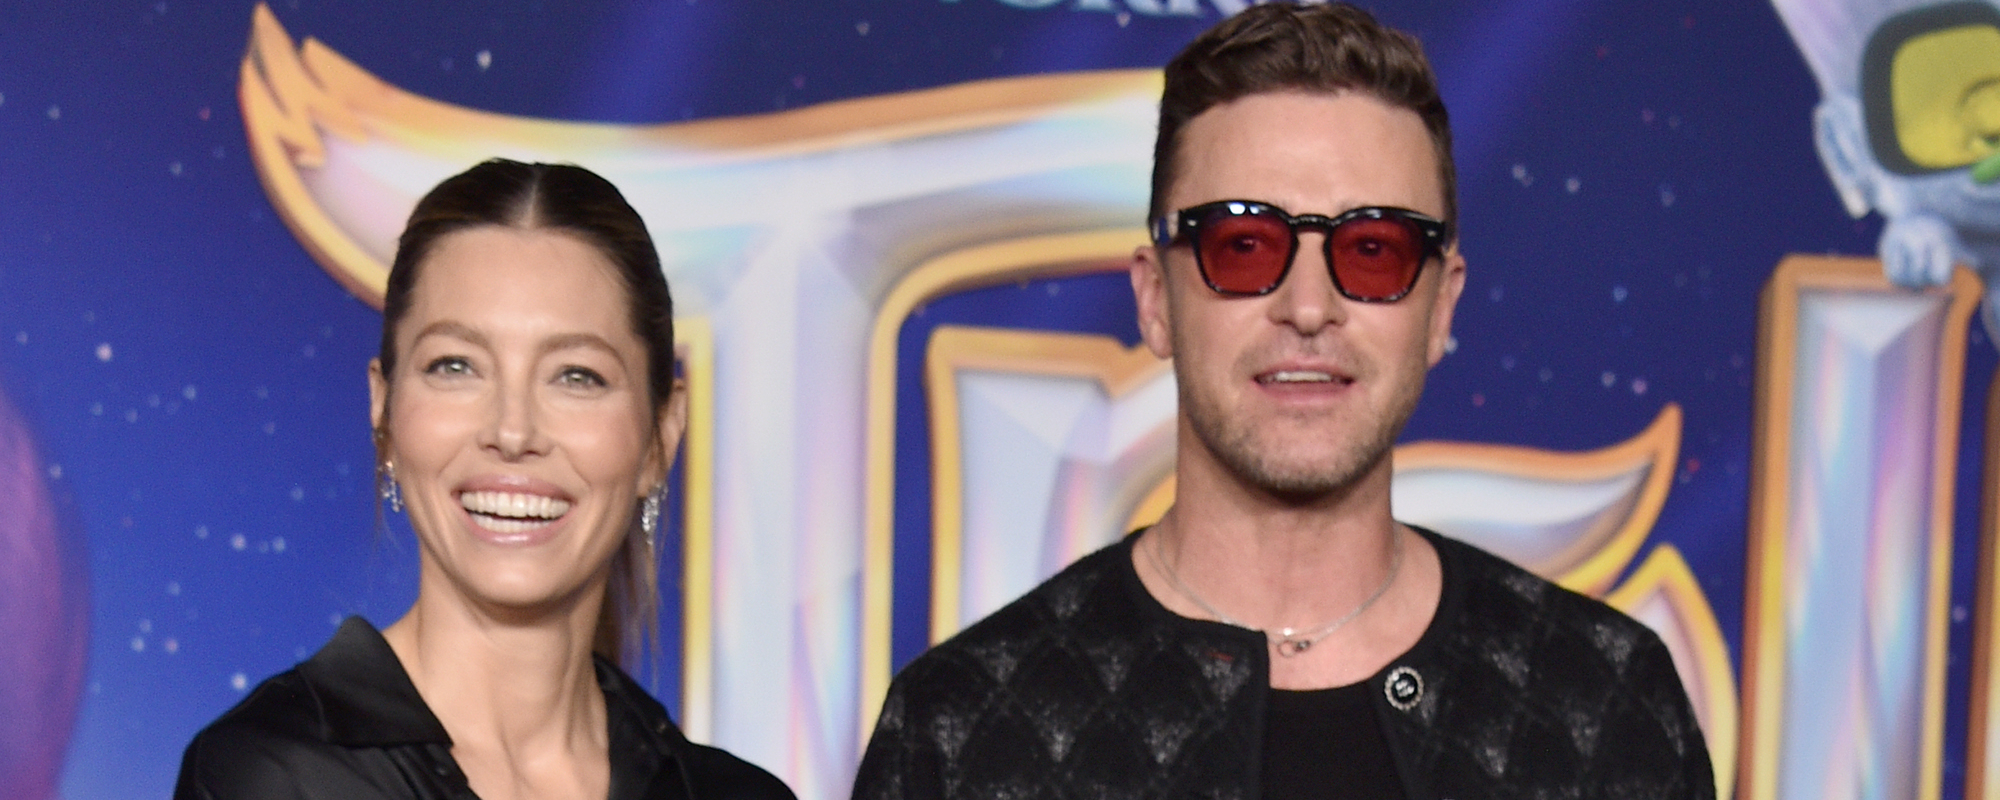 Jessica Biel Reveals Odd Shower Habit While Justin Timberlake Heads to ‘Saturday Night Live’